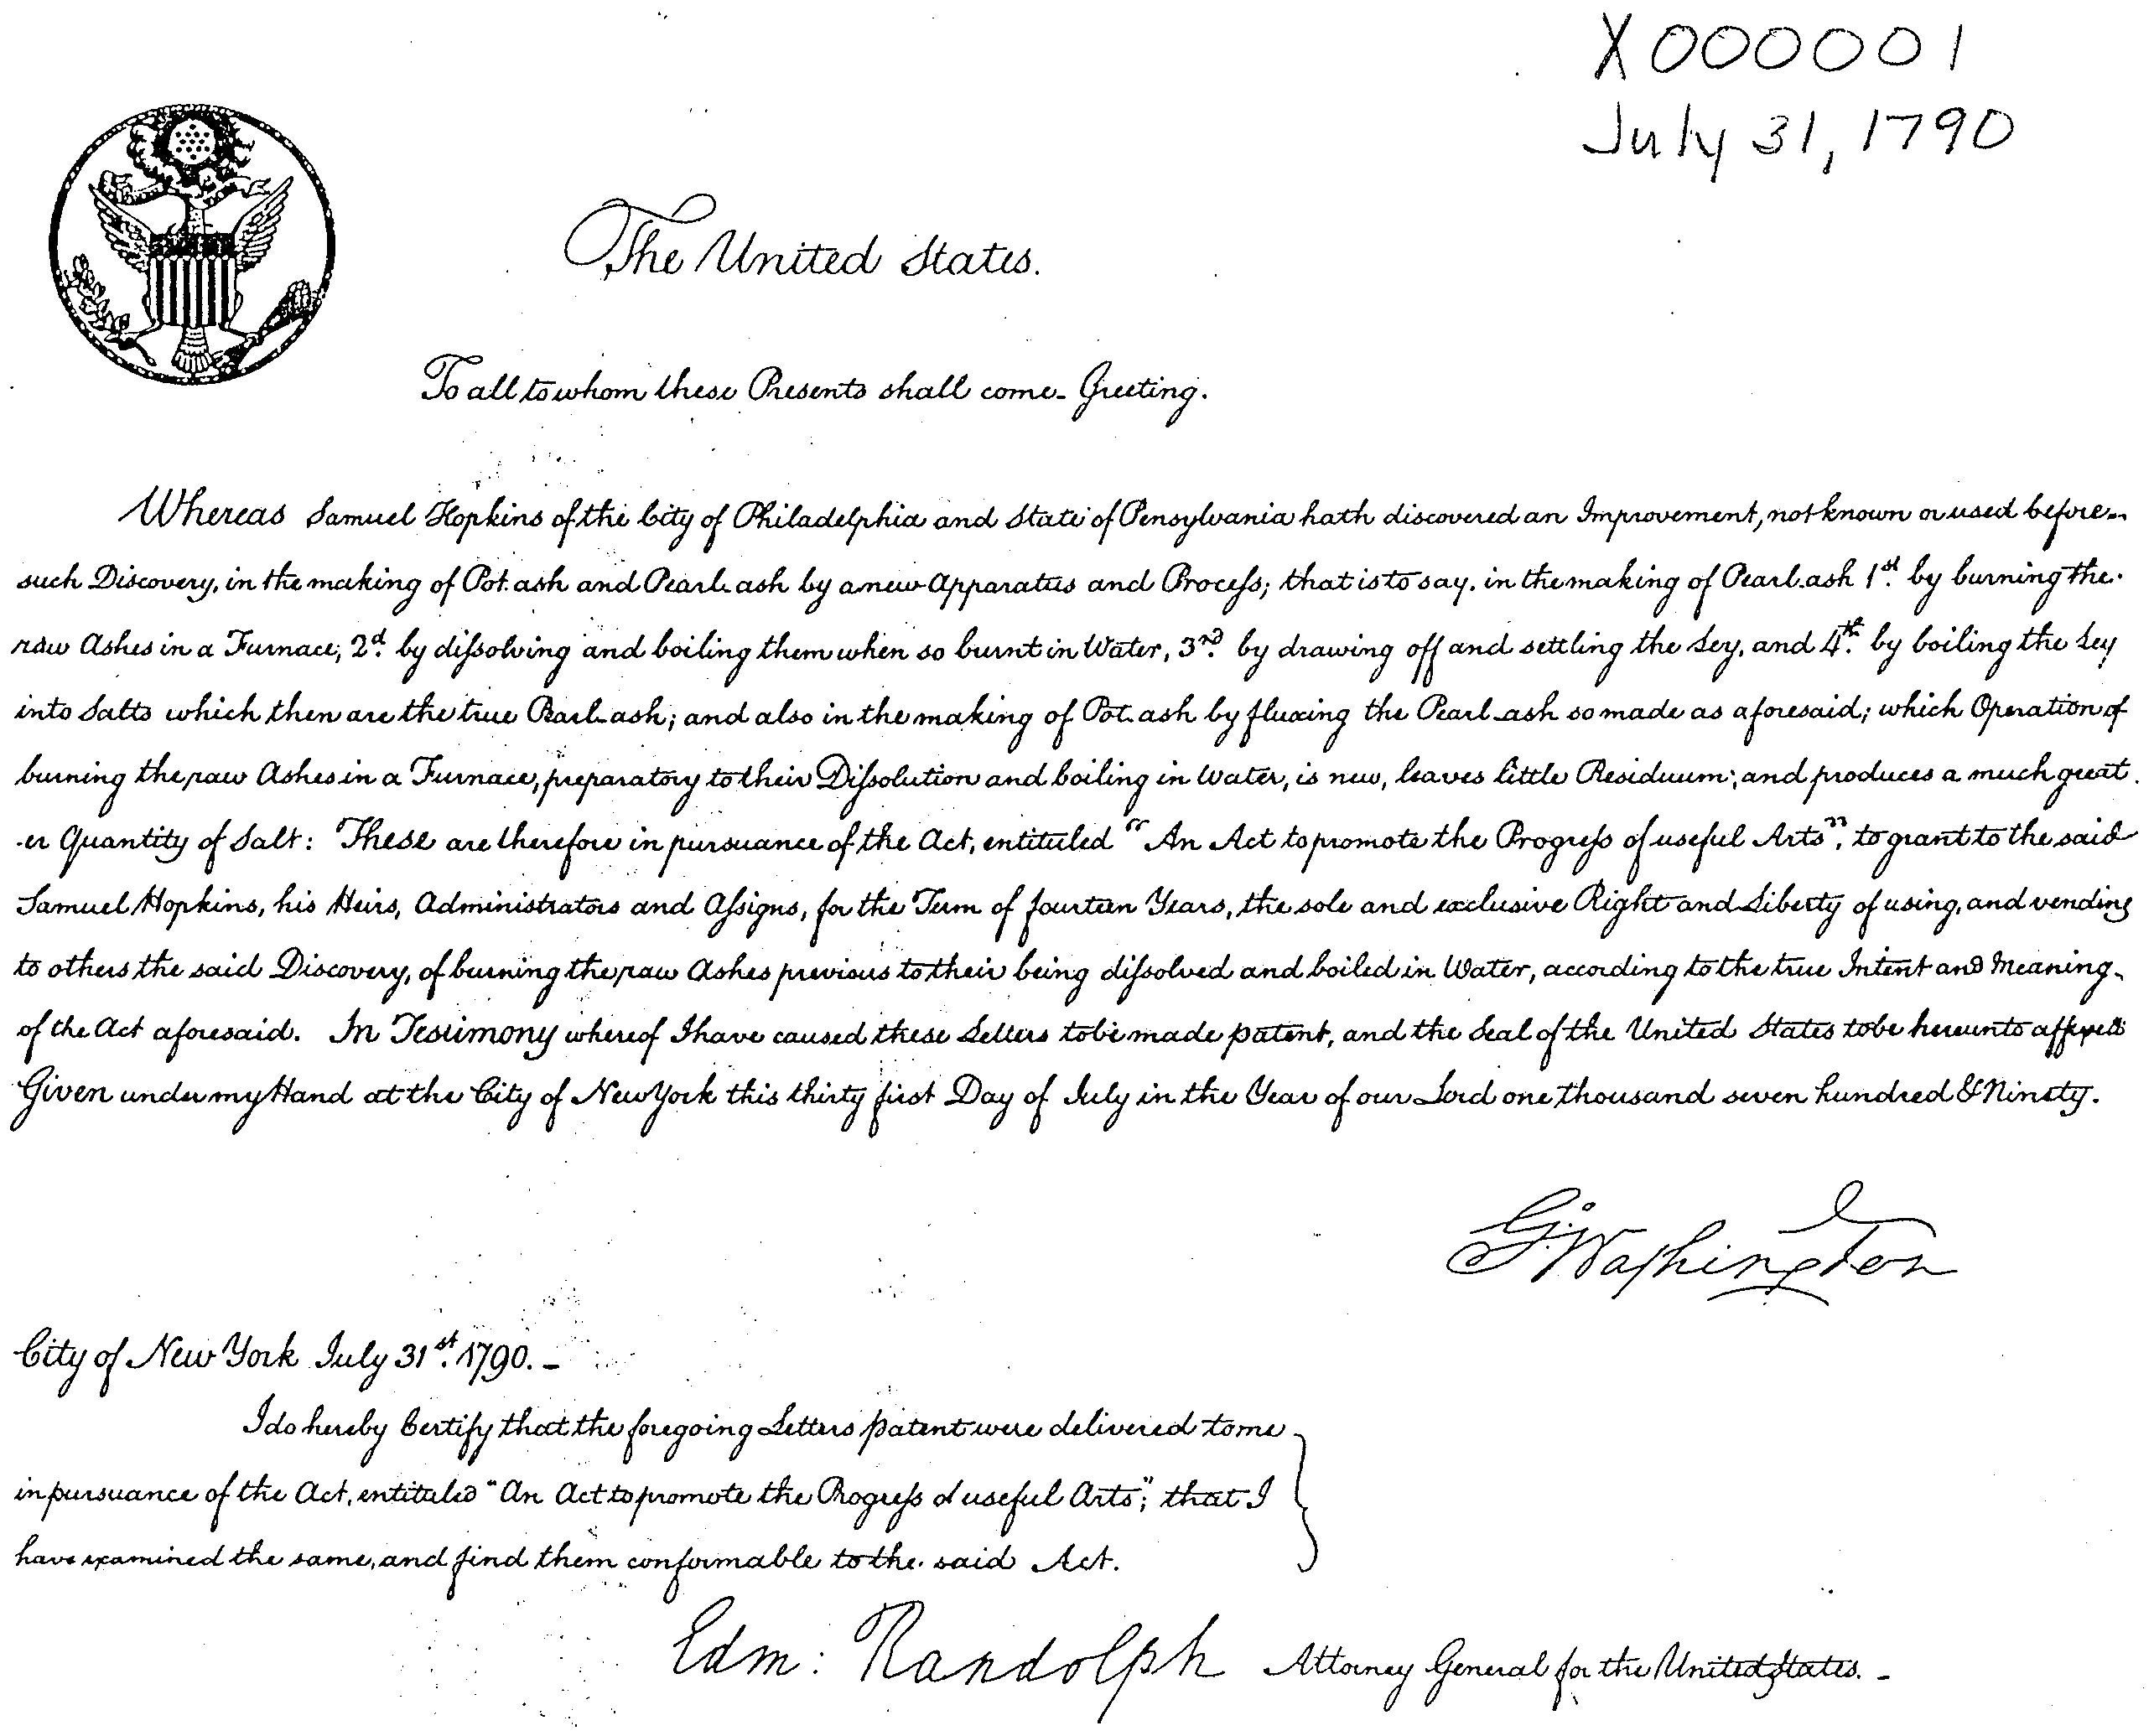 United States patent X000001